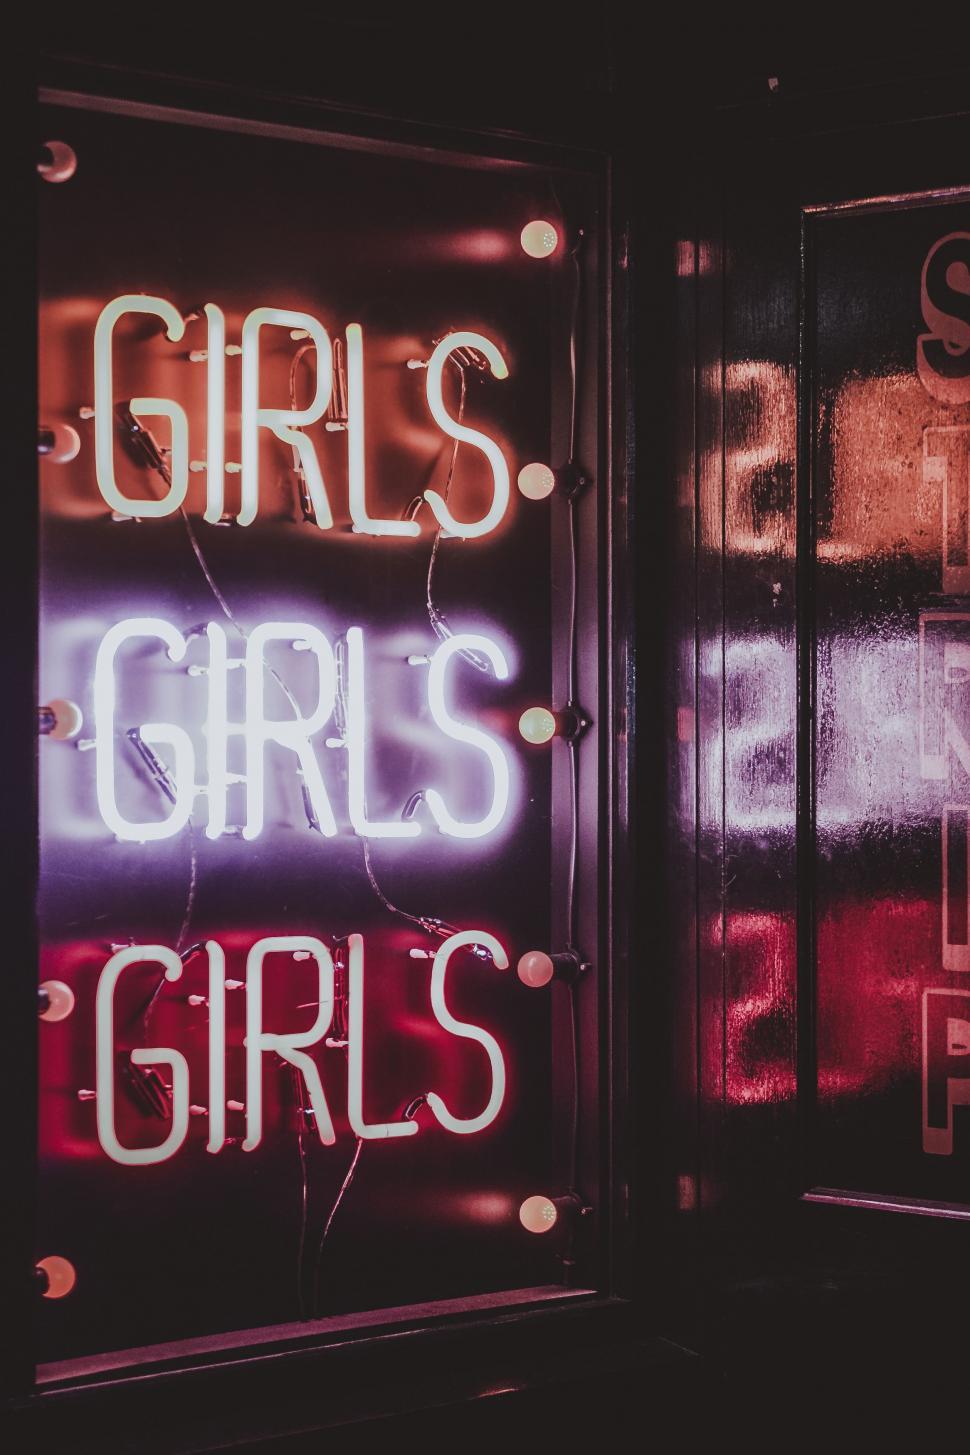 Free Image of Neon Sign That Says Girls, Girls, Girls 